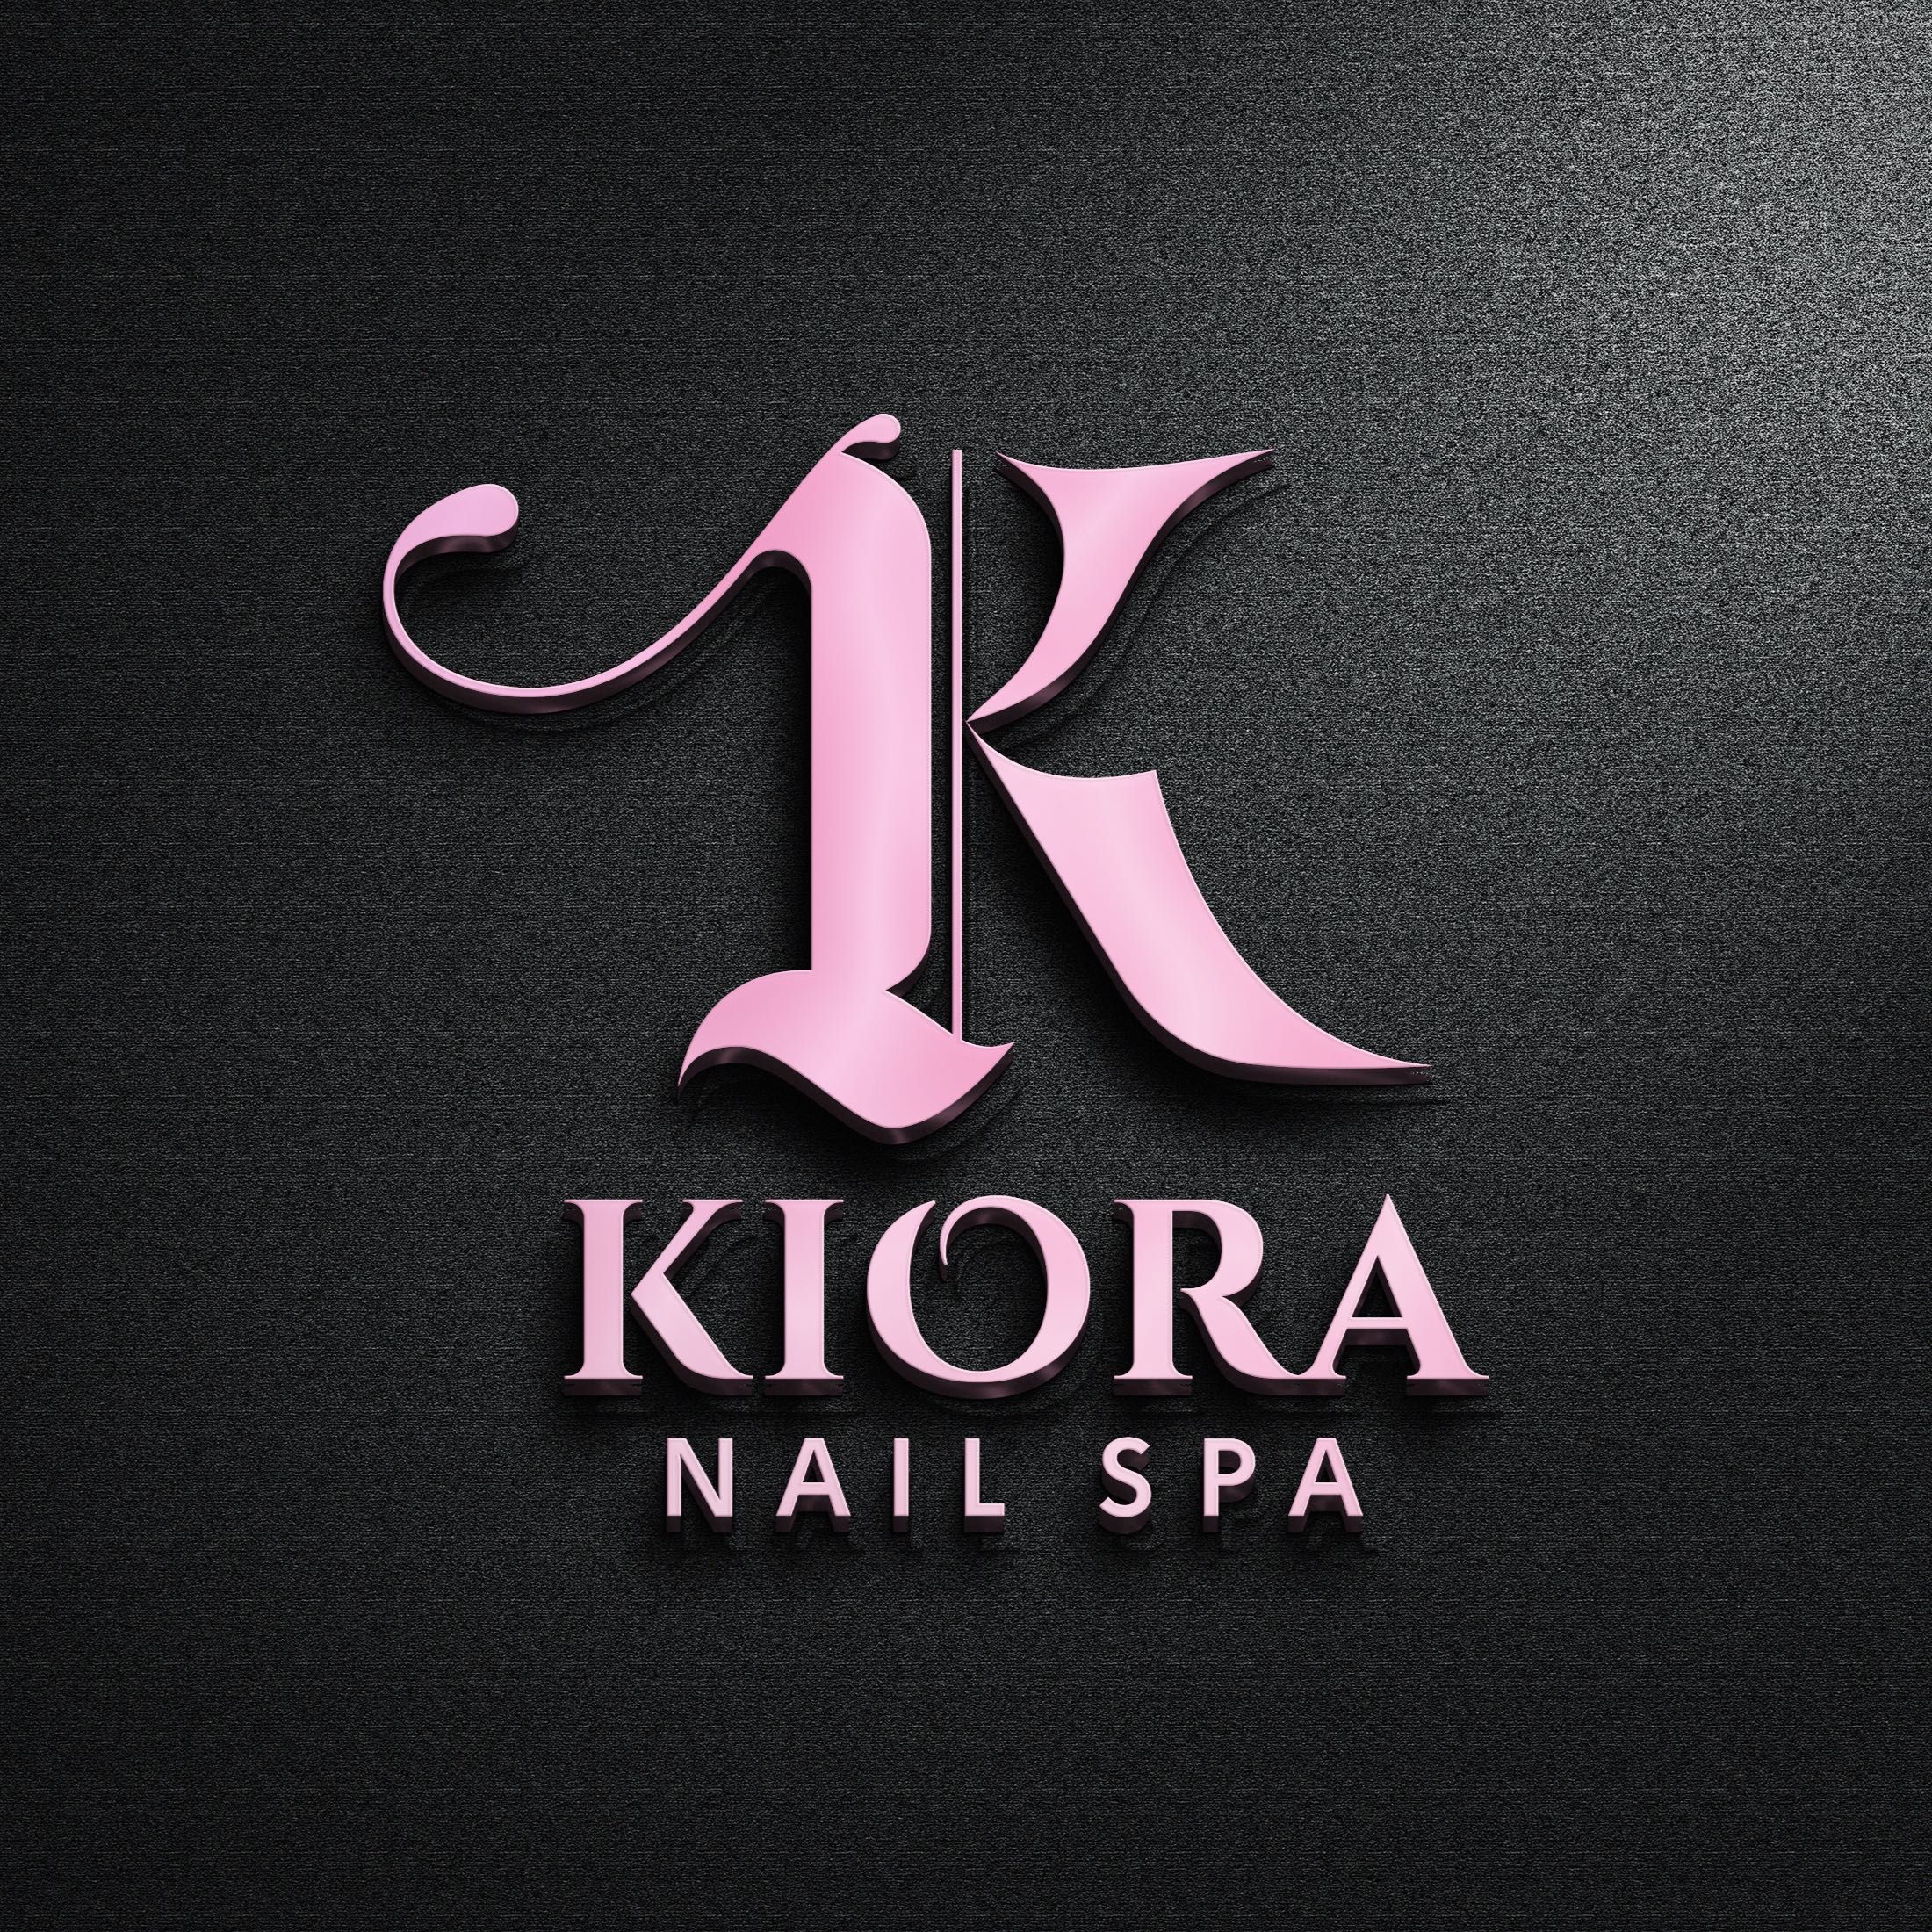 Kiora Nail Spa LLC, 21 N.Maple Ave Marlton NJ 08053, Suite F, Marlton, 08053